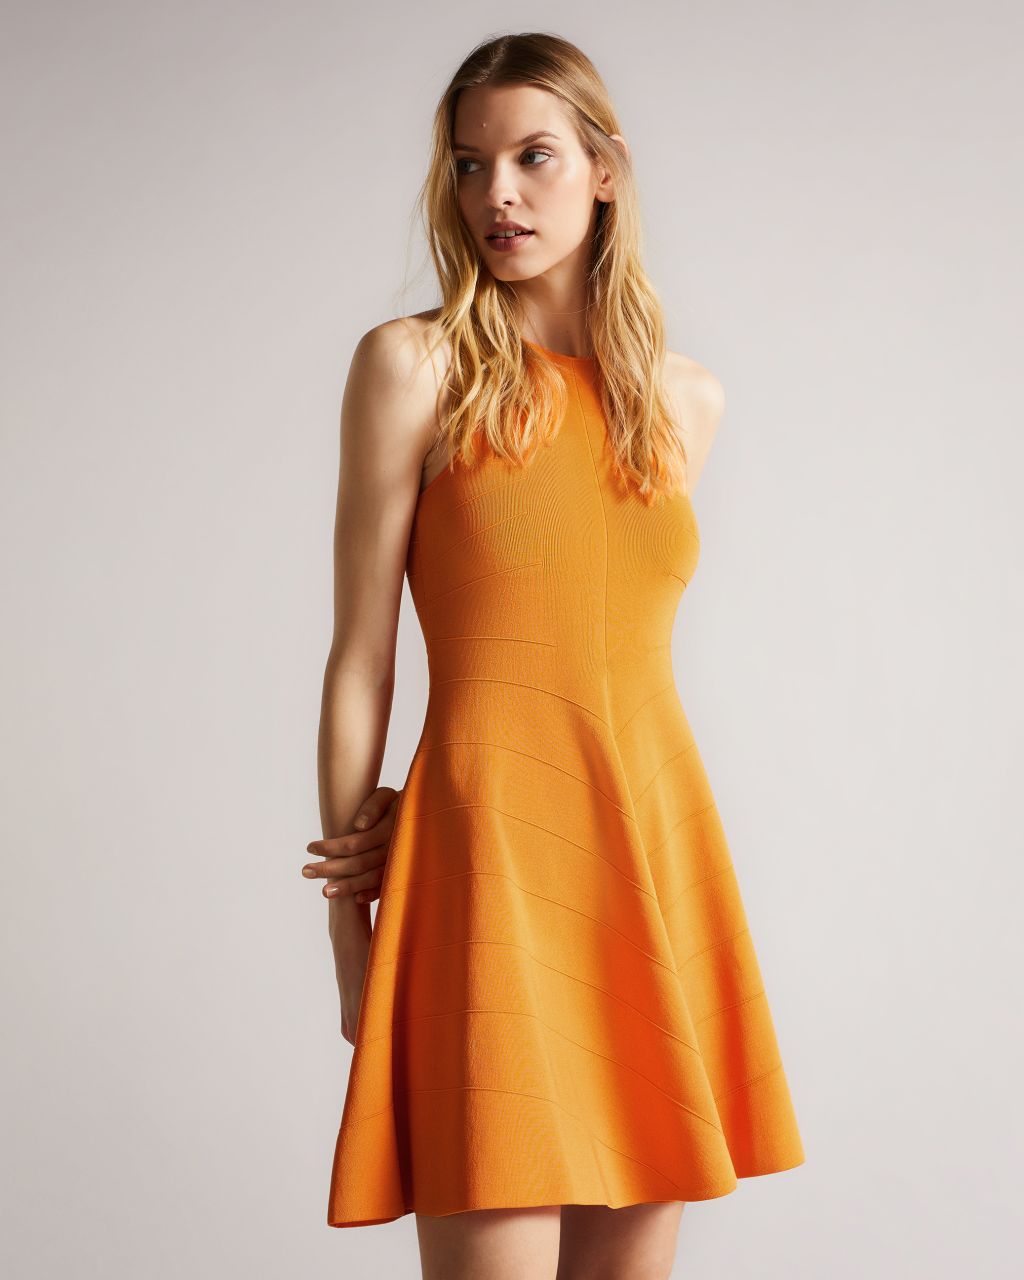 Ted Baker Women's Rayon Flippy Knit Dress in Dark Orange, Salny